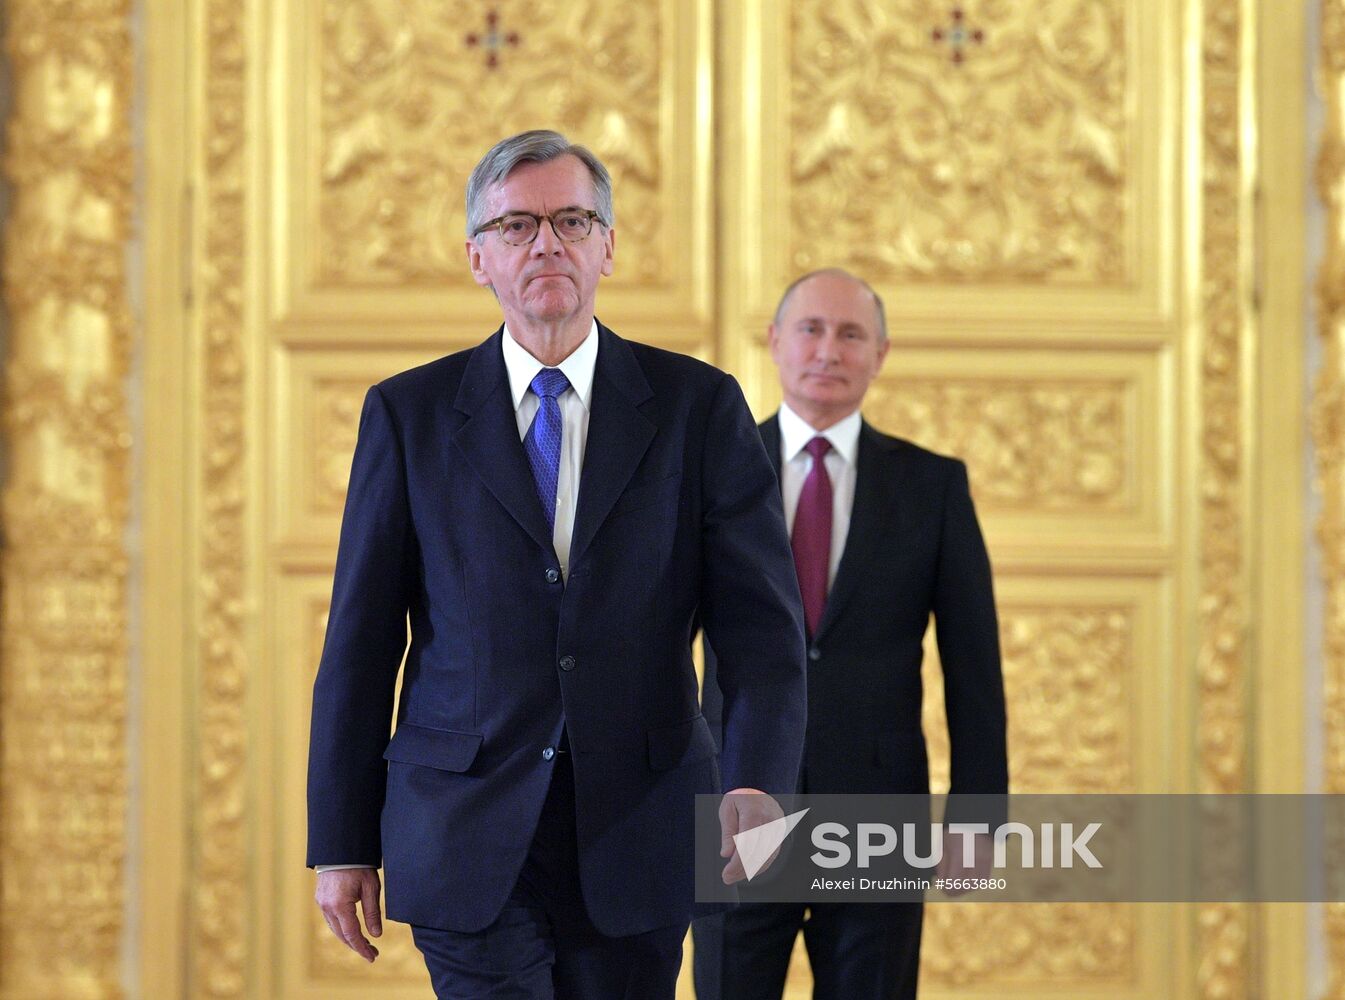 President Putin receives foreign ambassadors' credentials